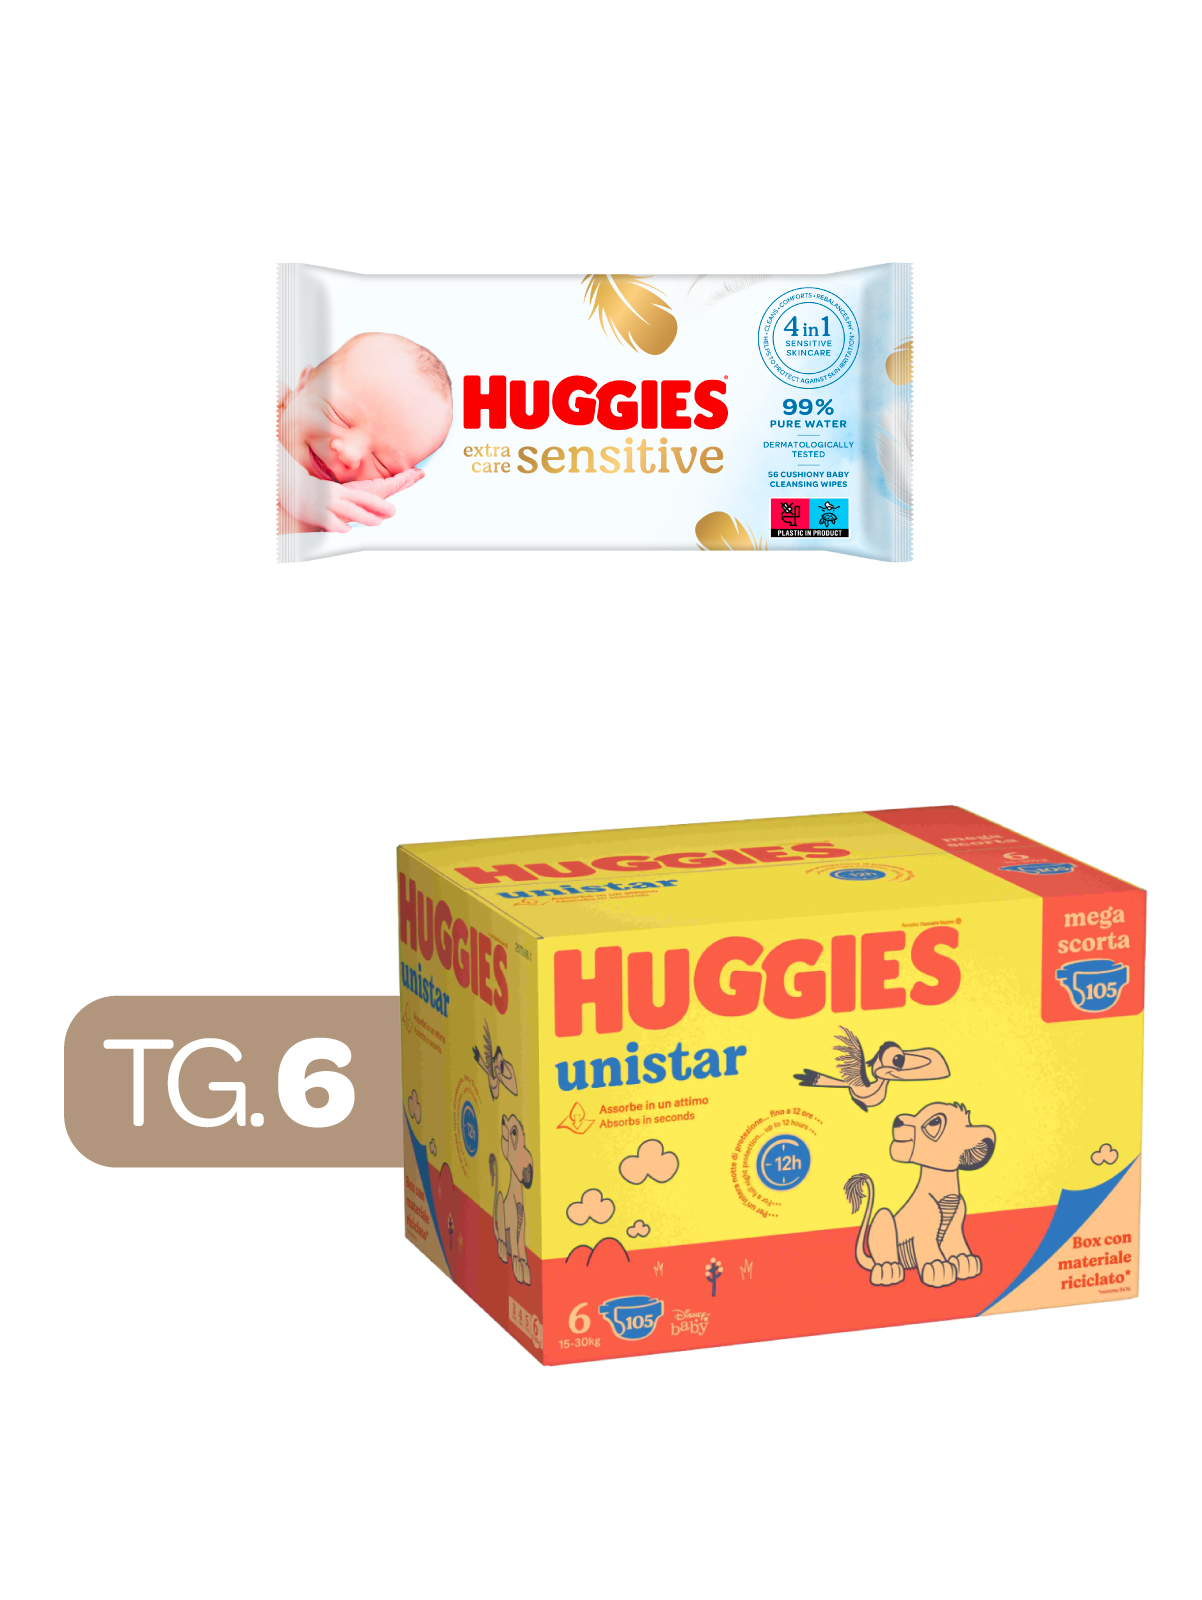 Huggies  unistar megapack 15-30 kg tg.6 (extralarge) - 105 pz + huggies - extra care huggies salviette  56 - 